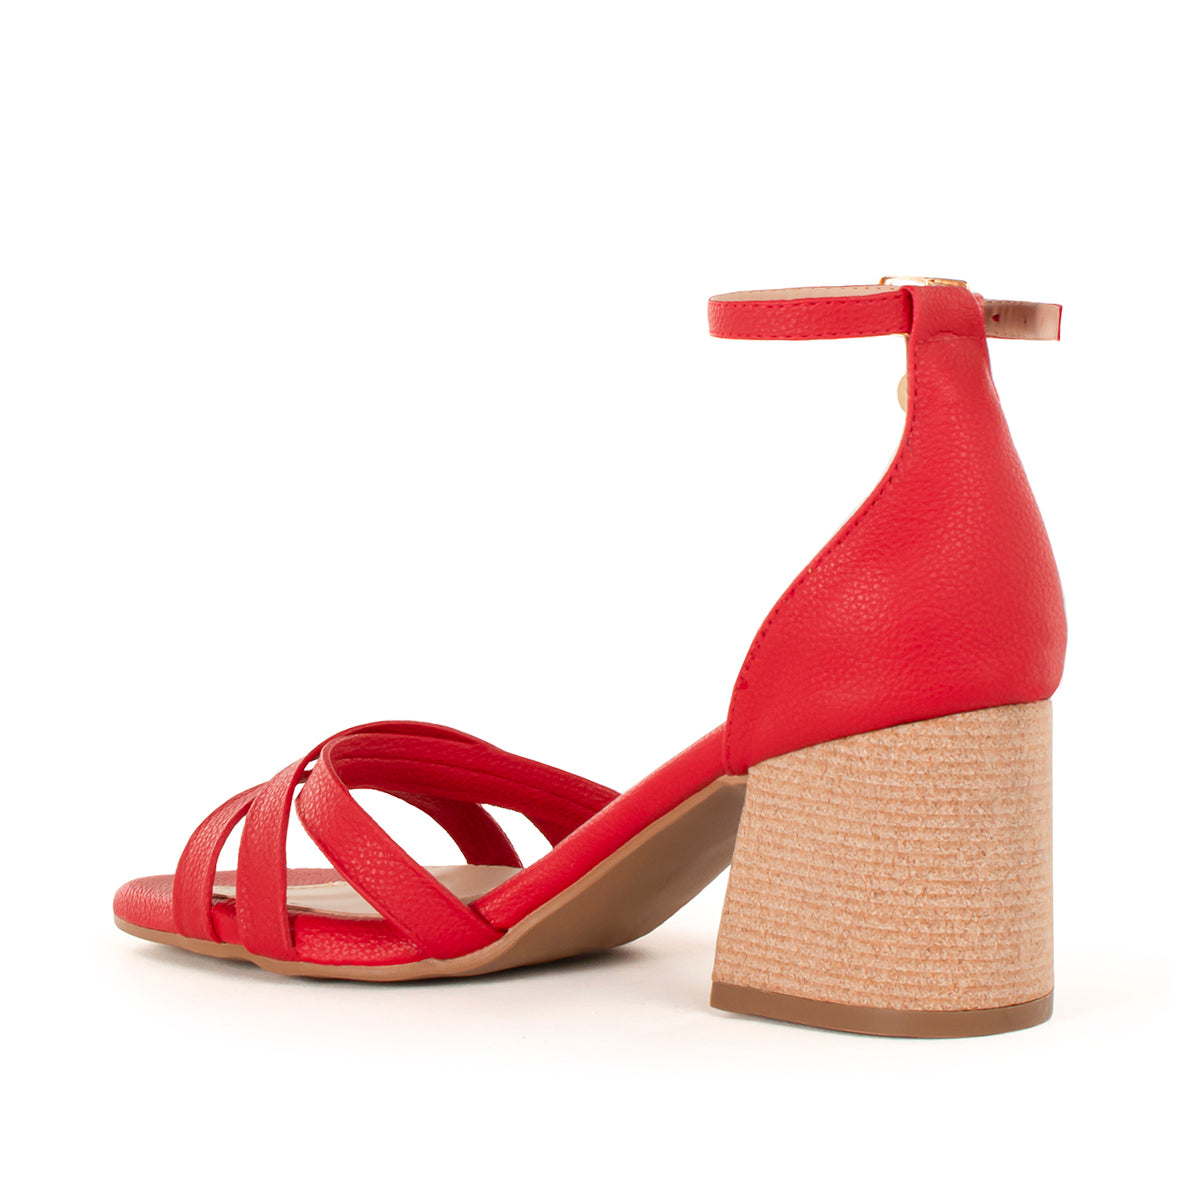 Sandalia color rojo, para dama